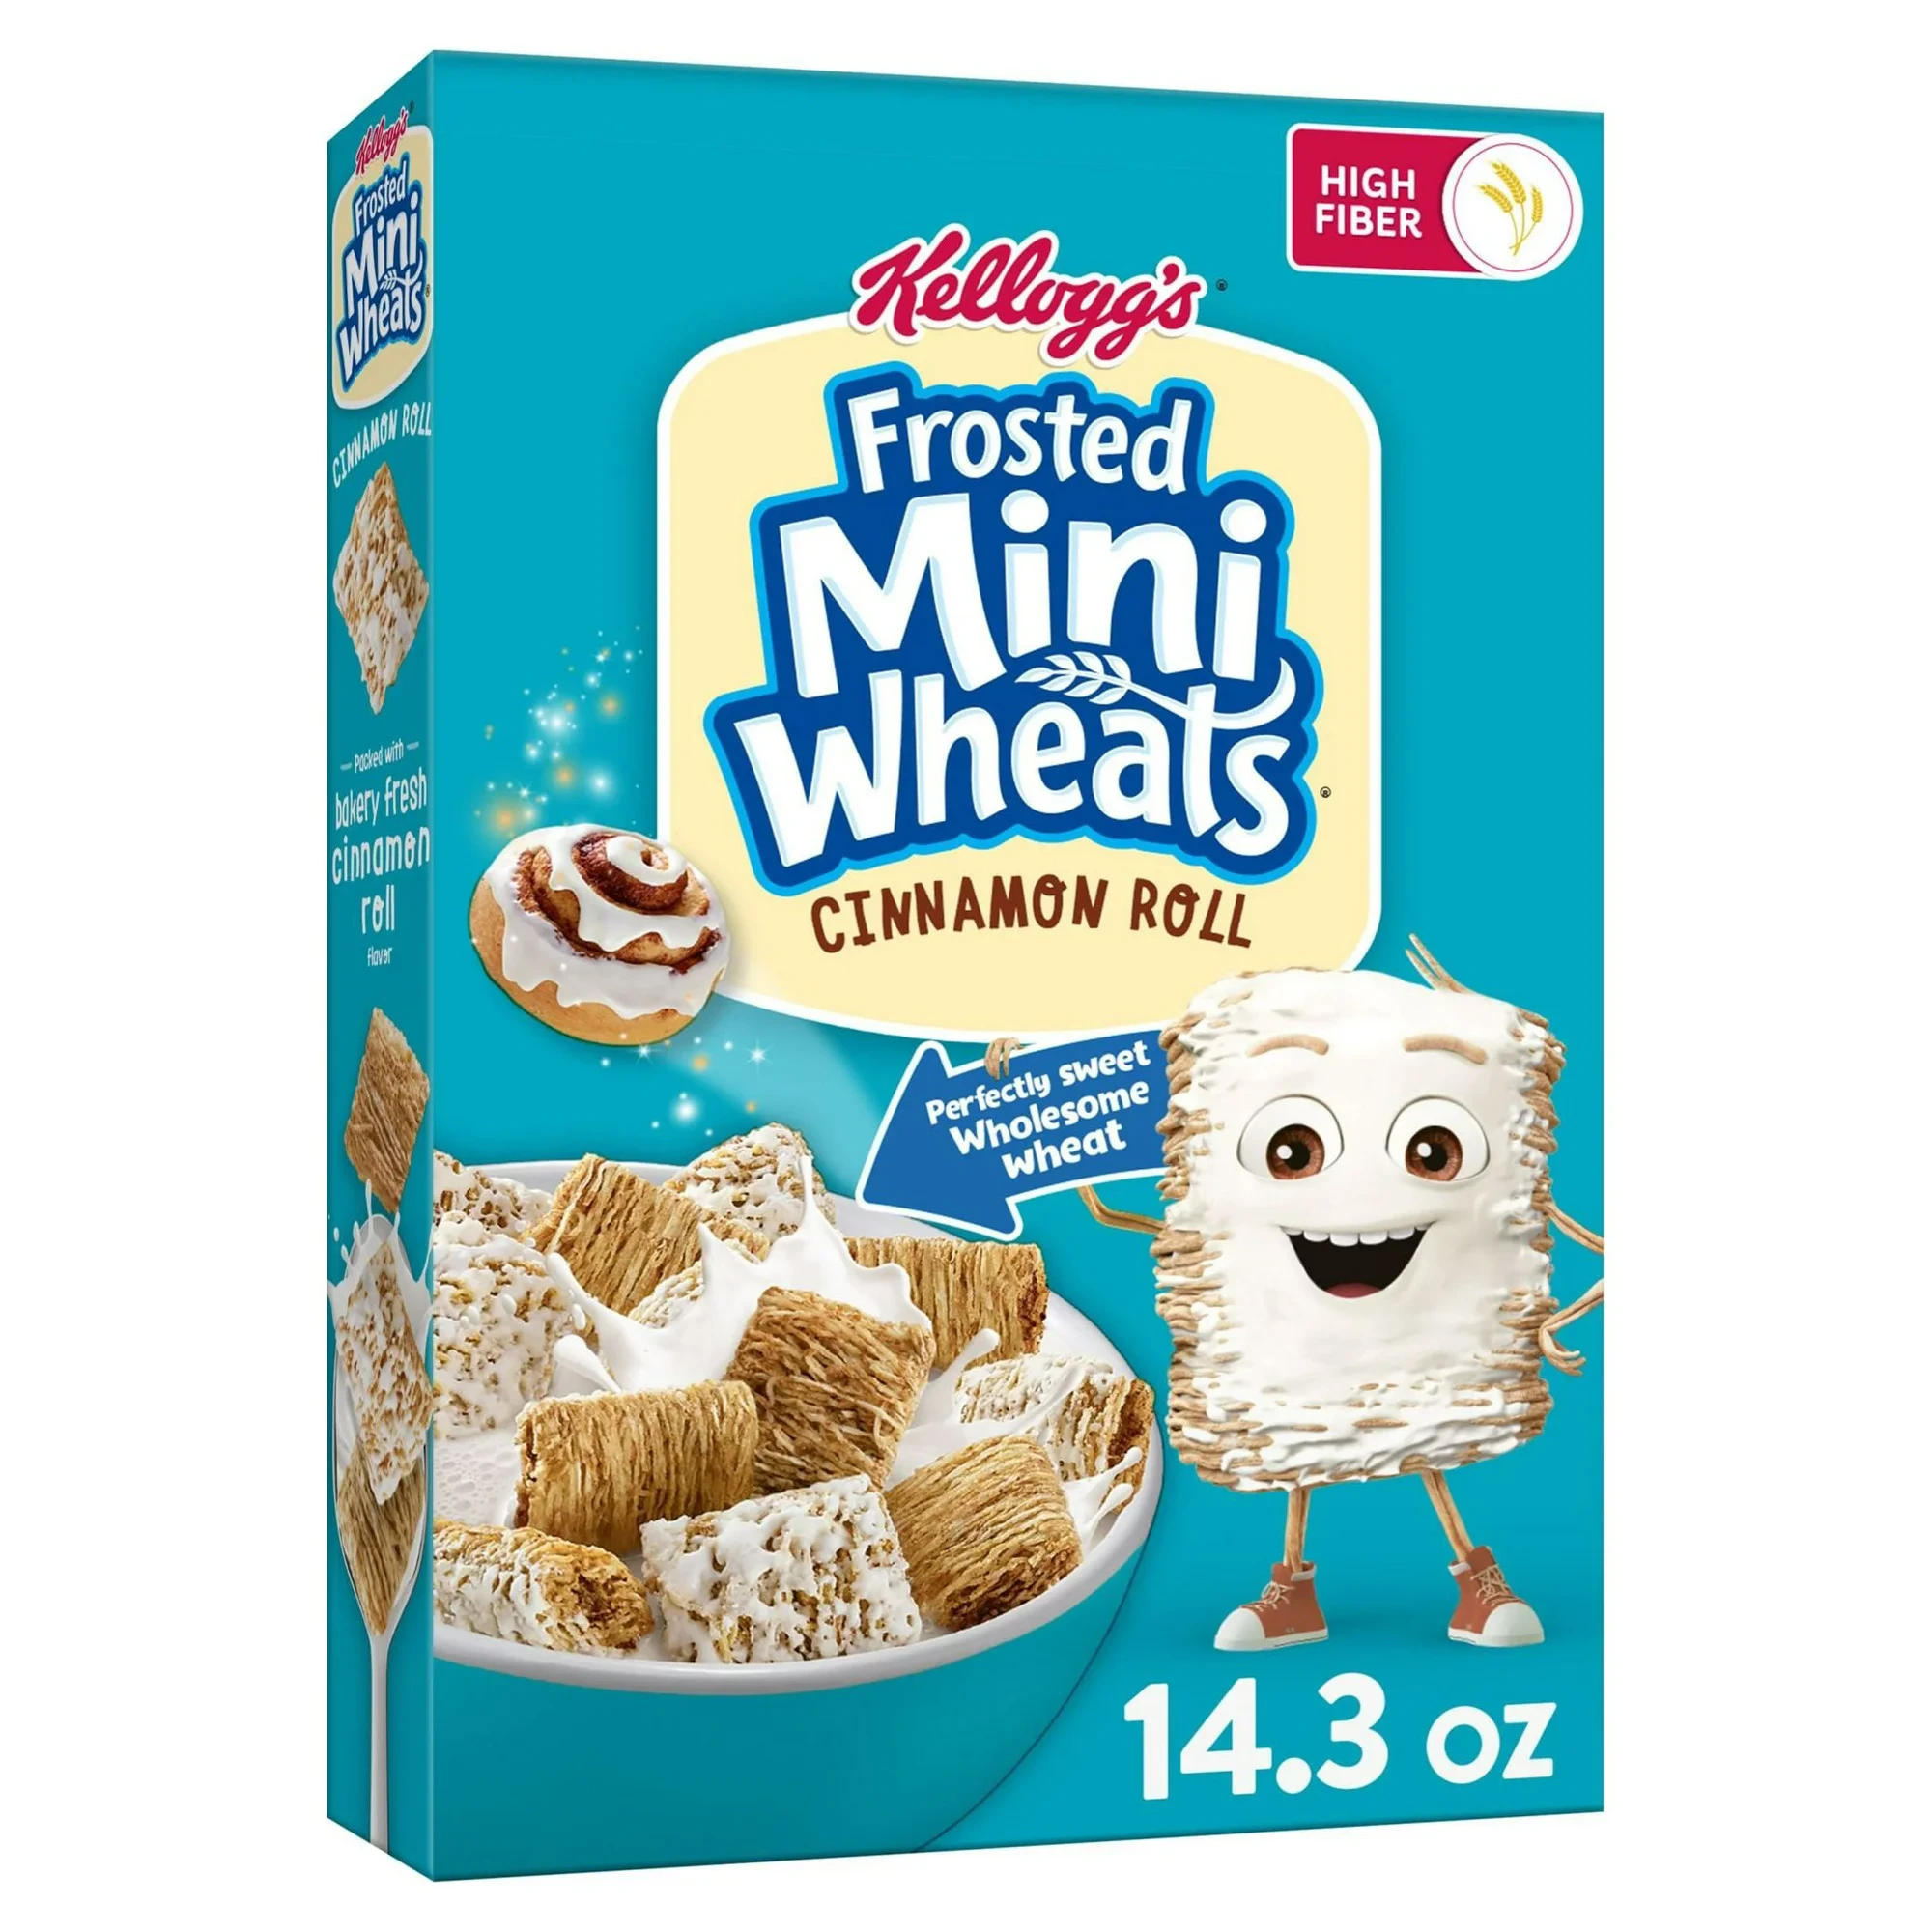 The box of Kellogg's Frosted Mini Wheats Cinnamon Roll